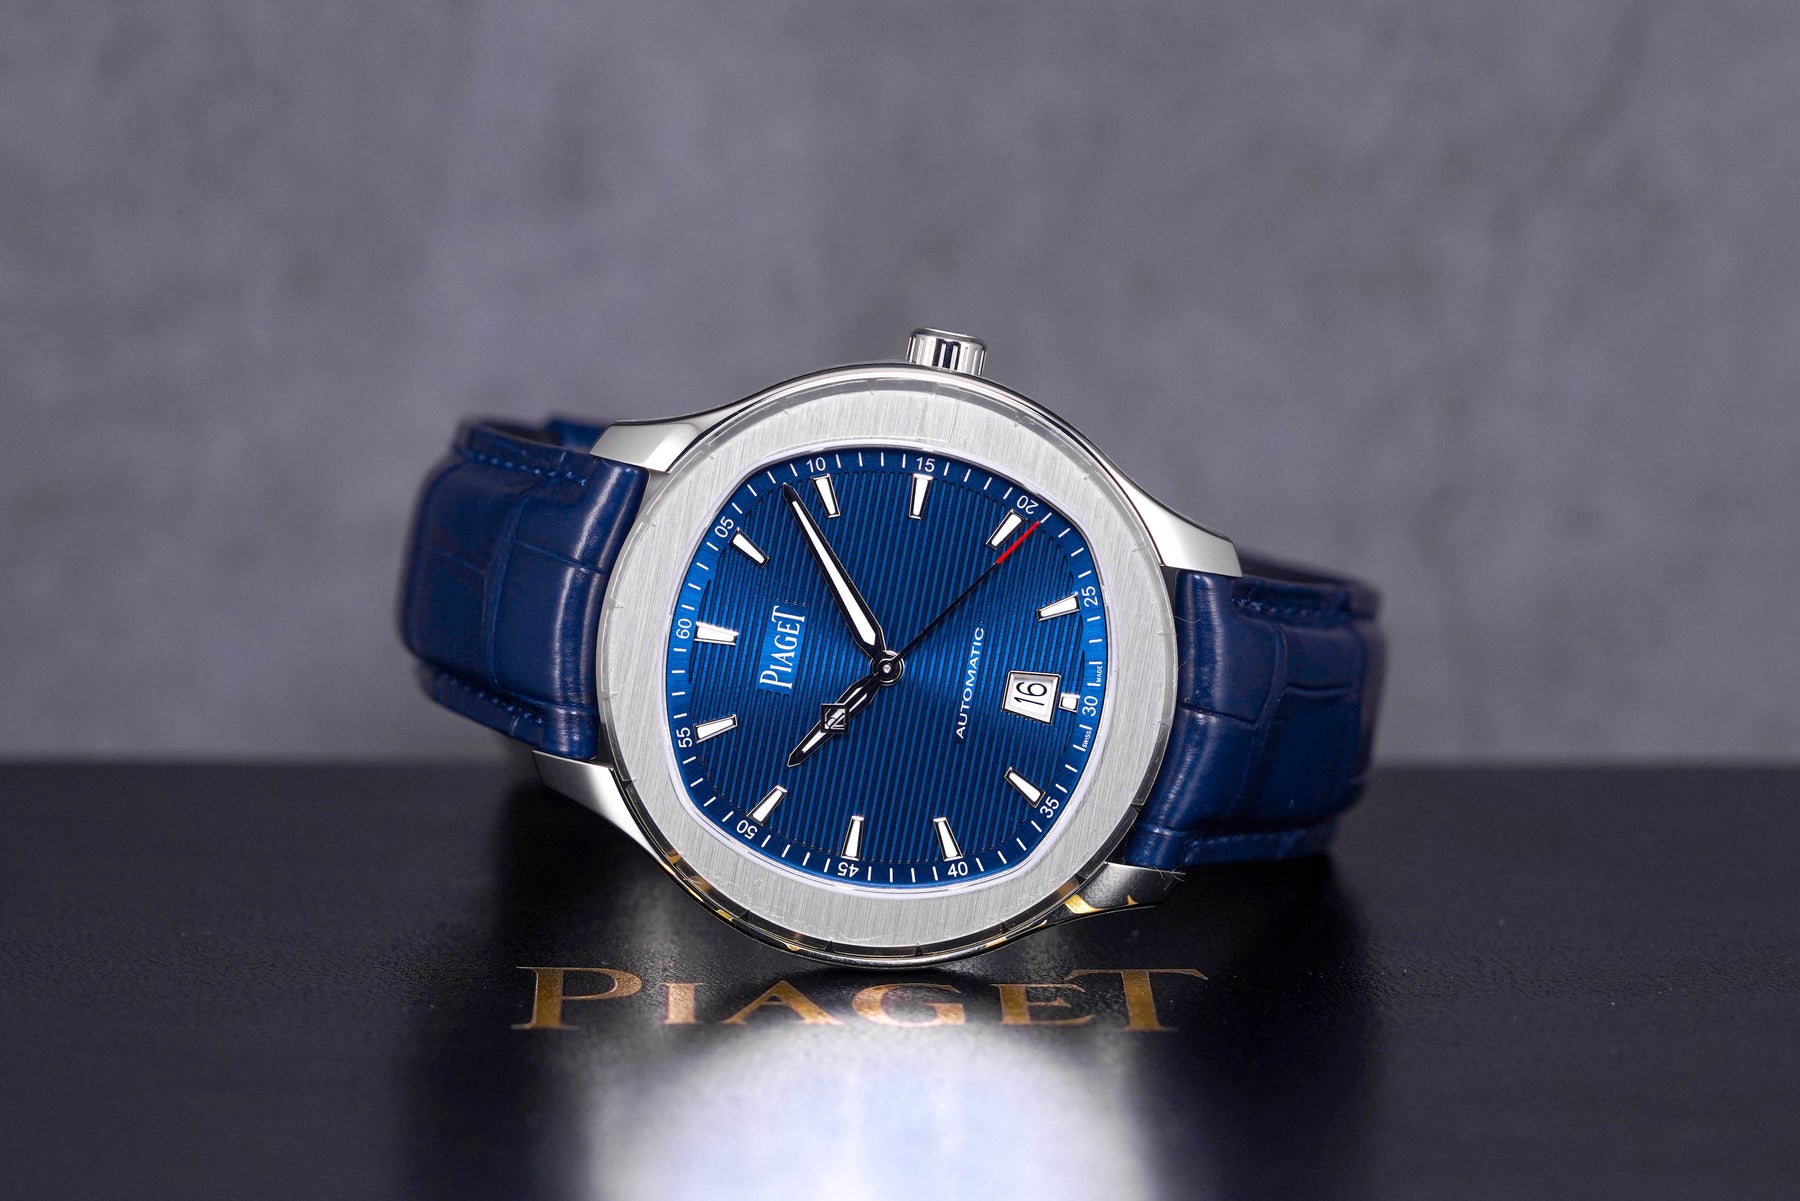 Piaget Polo S Blue